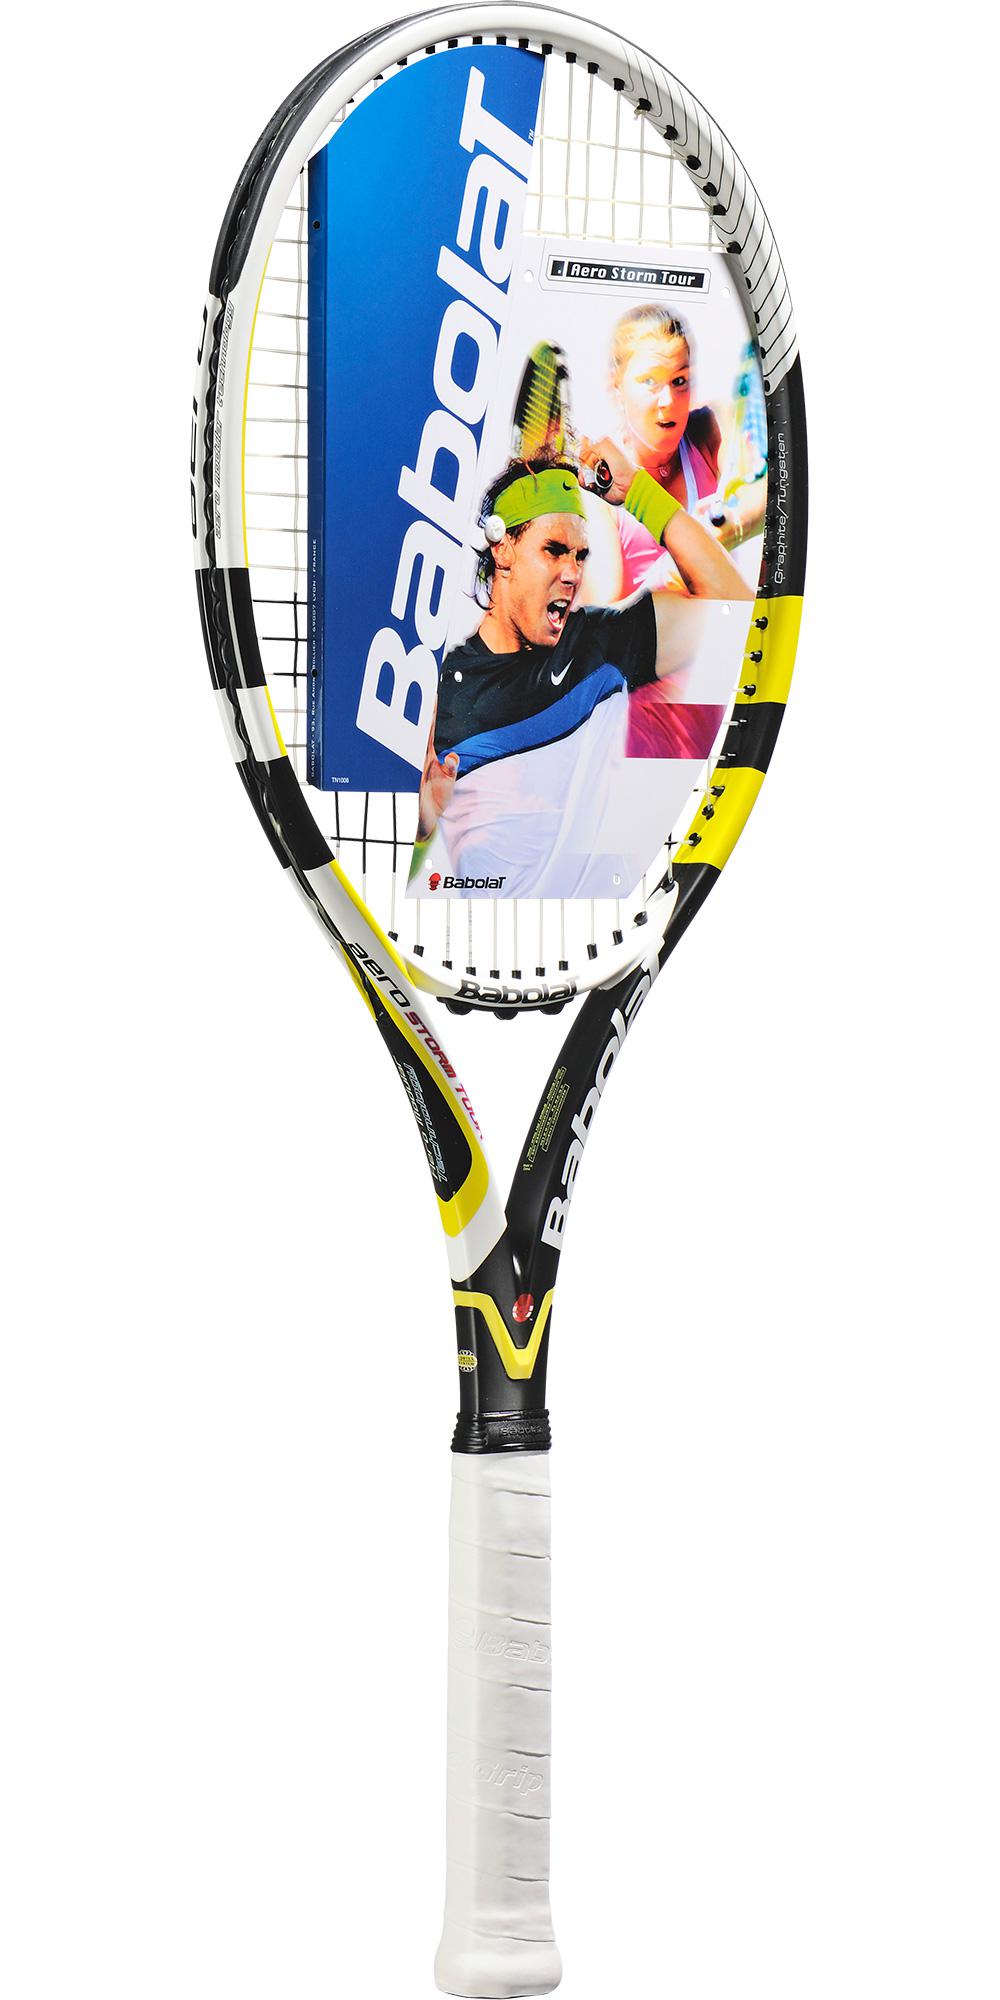 Babolat Aero Storm Tour GT Tennis Racket (320g) - Tennisnuts.com